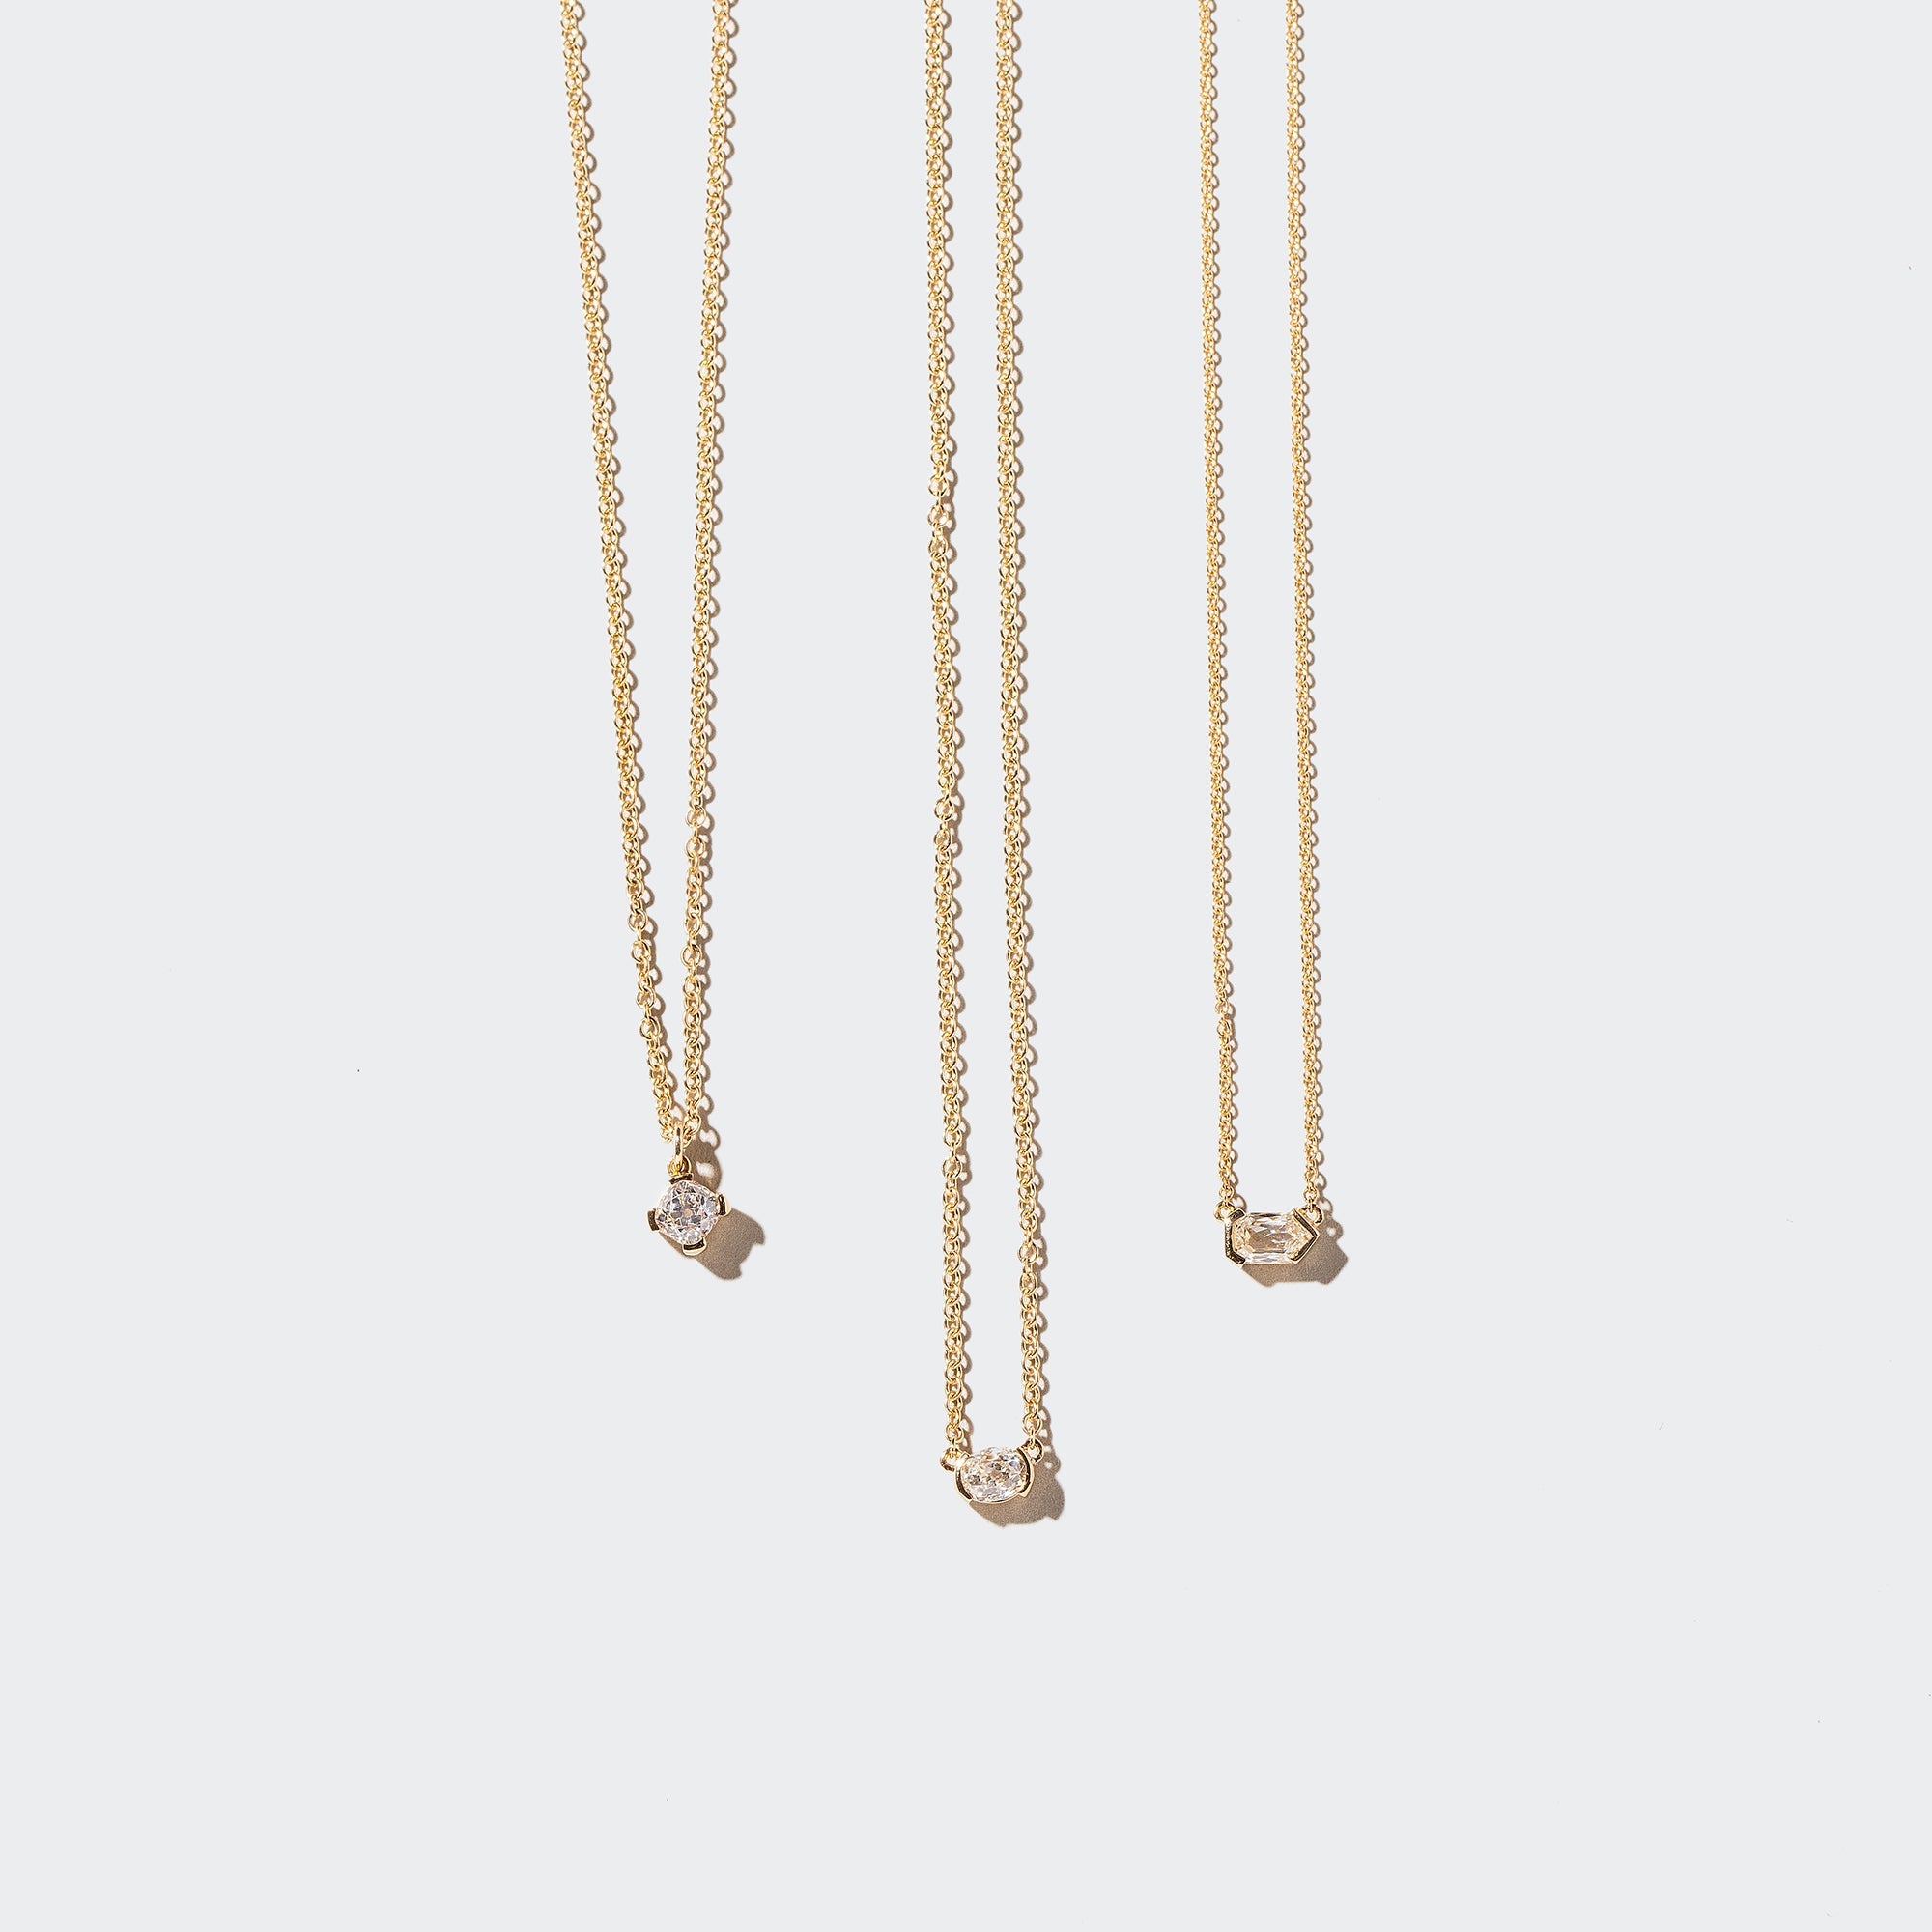 product_details:: Diamond Necklaces on light color background.